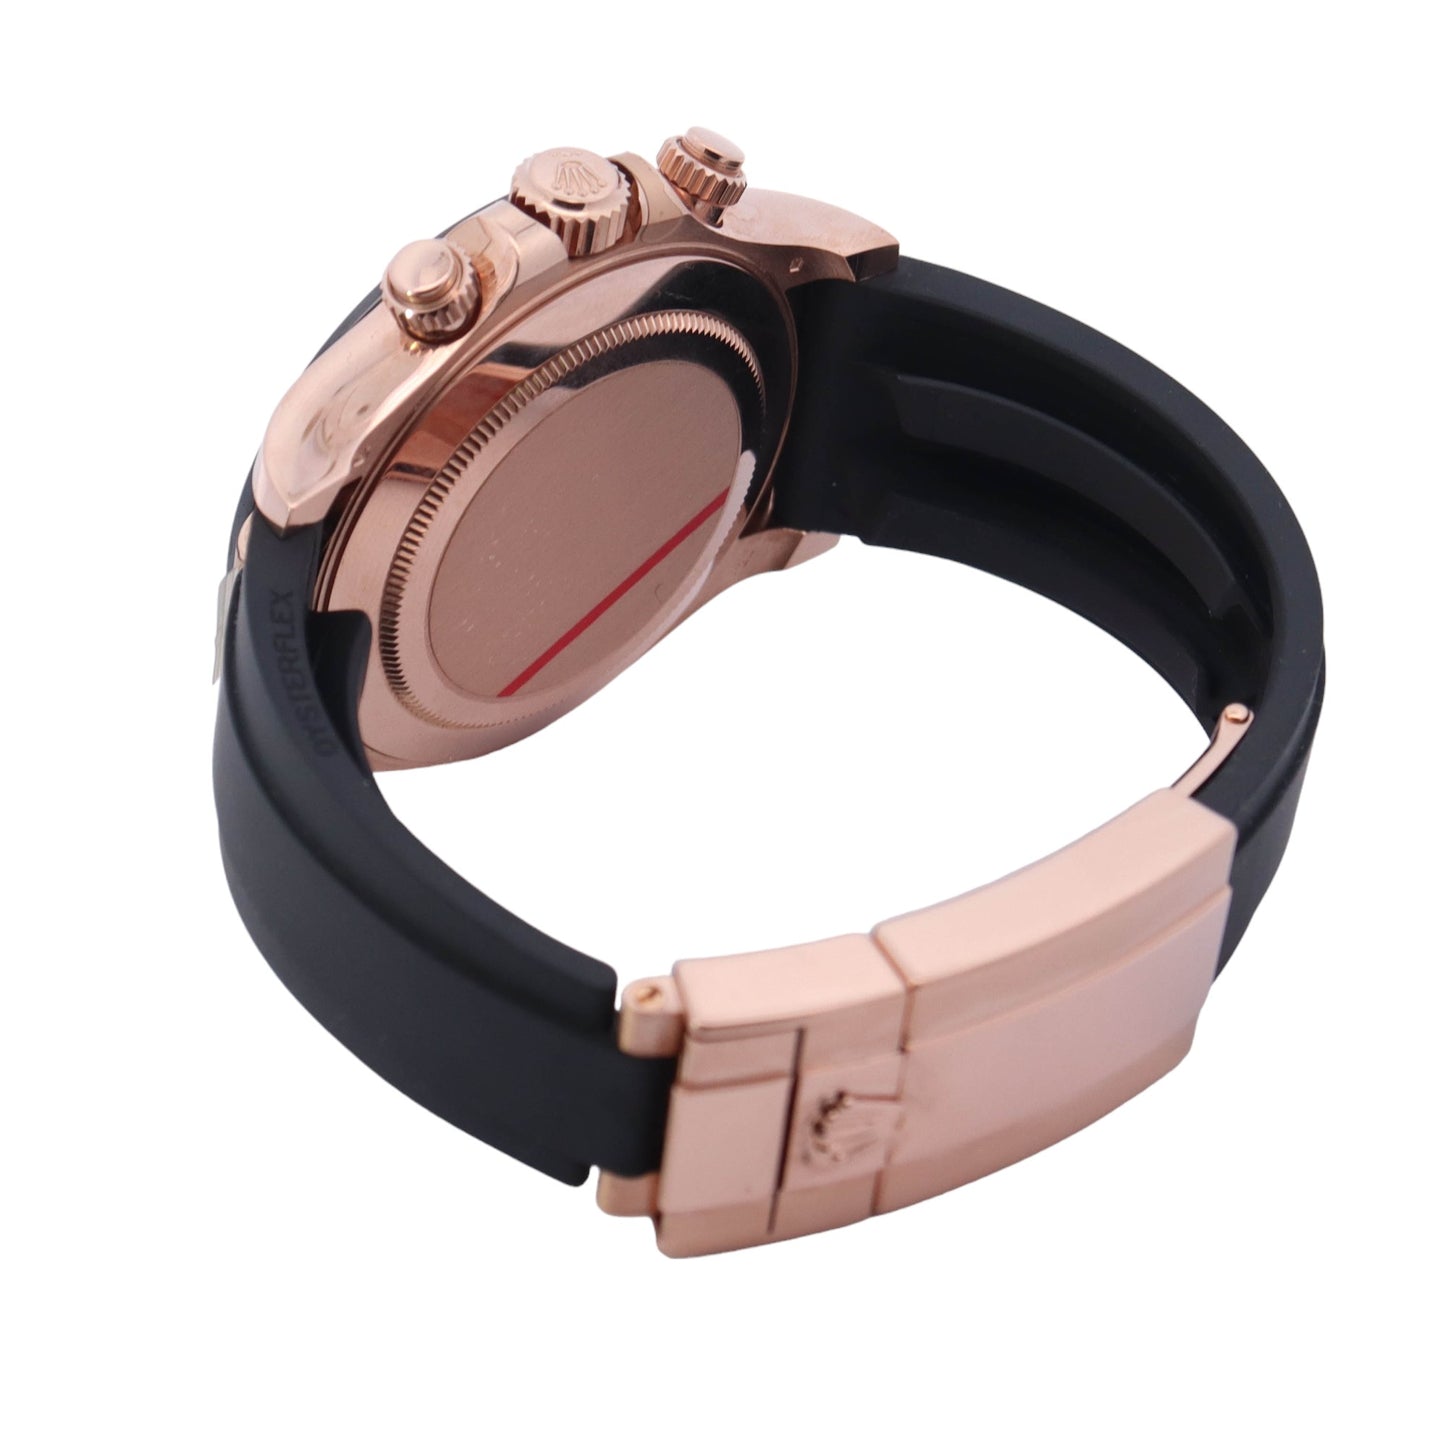 Rolex Daytona Rose Gold 40mm Sundust Pink Chronograph Dial Watch Reference# 116515LN